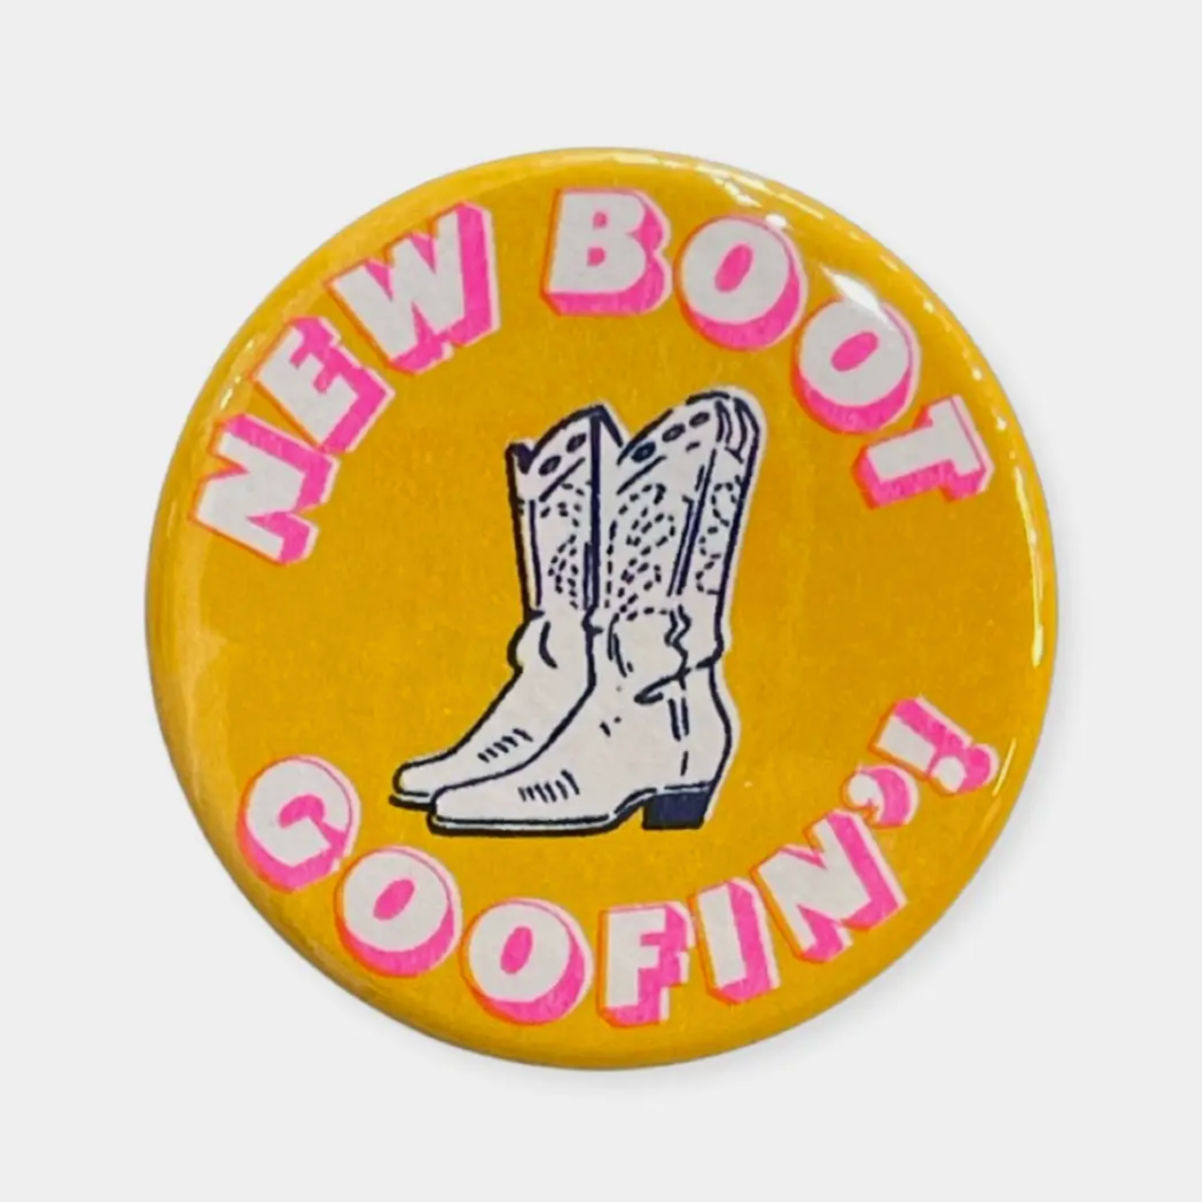 New Boot Goofin' Button - 1.75"